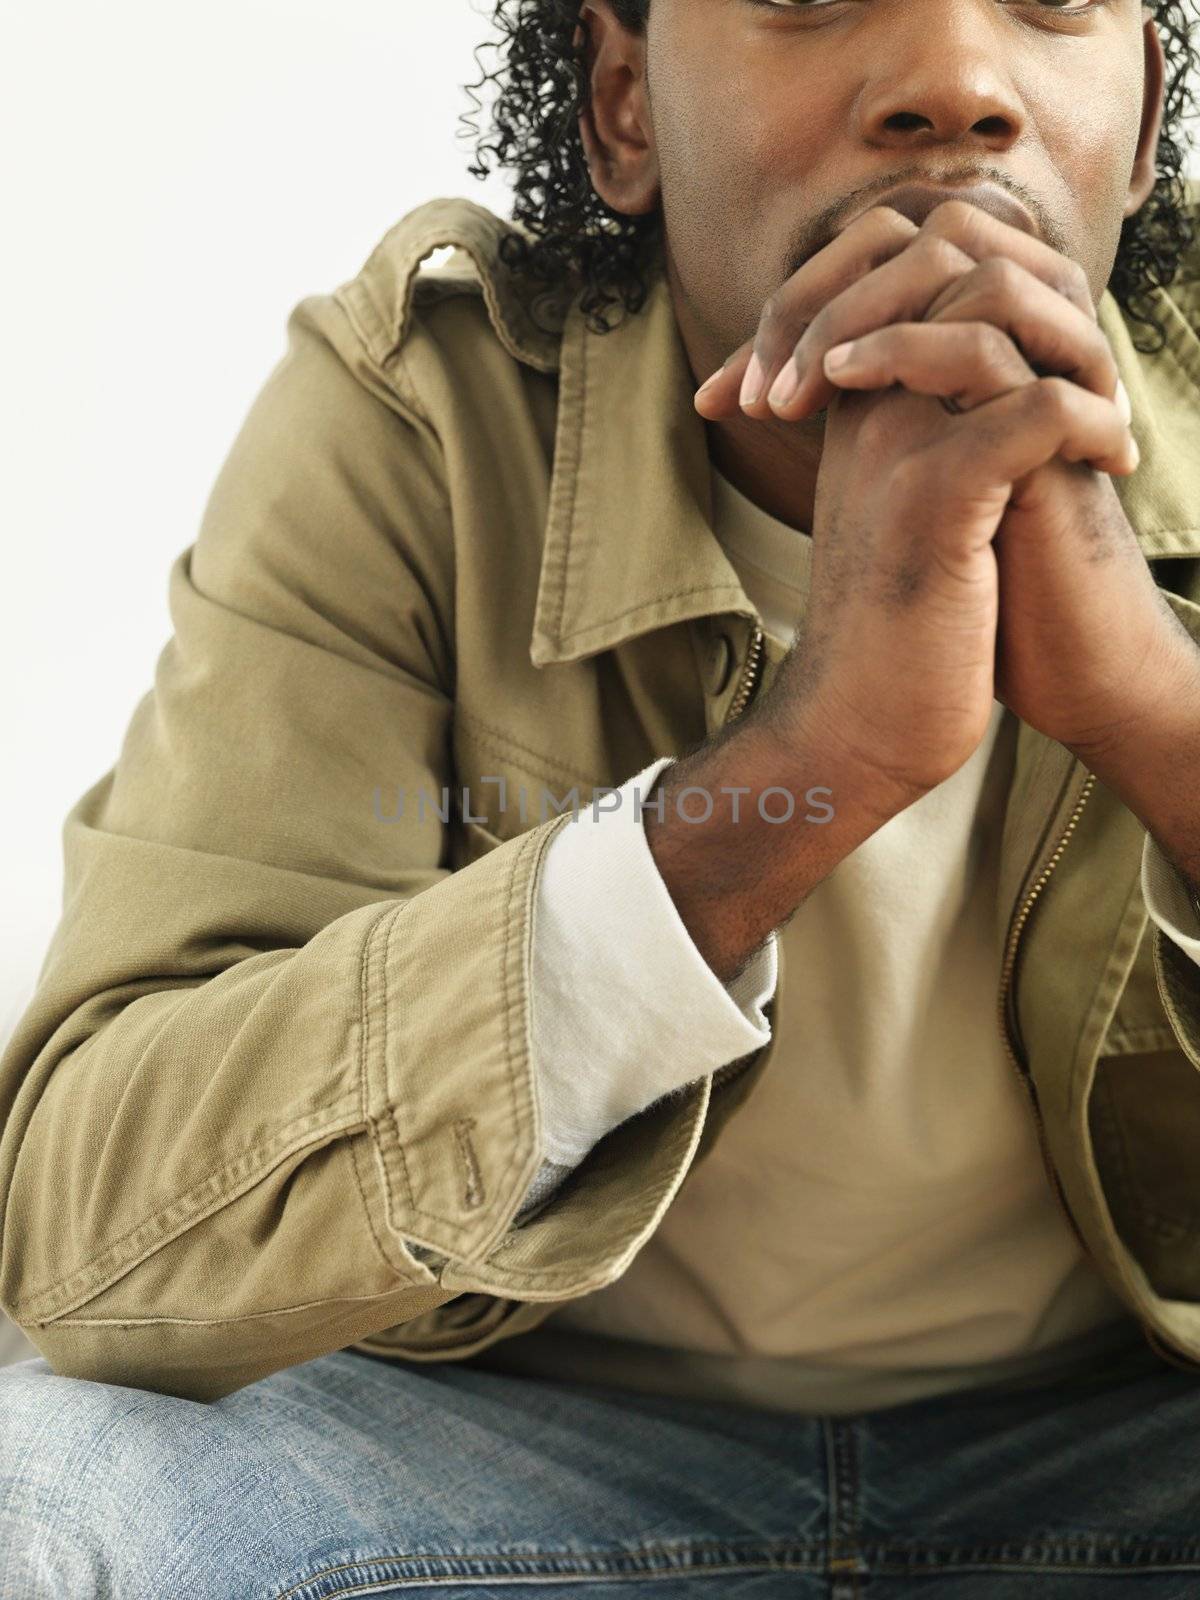 Pensive man portrait by iofoto